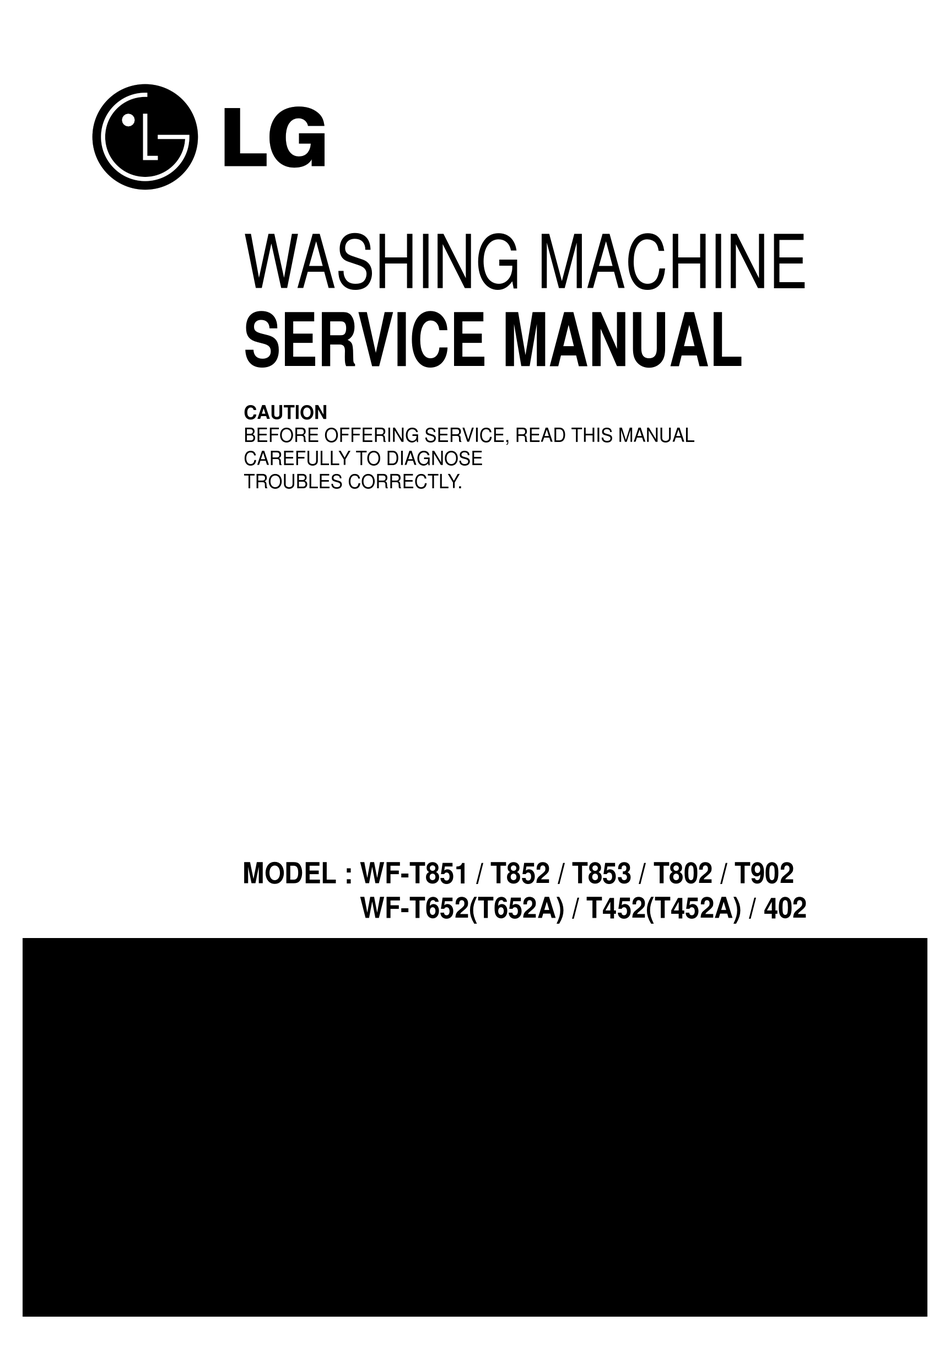 LG WF-T851 SERVICE MANUAL Pdf Download | ManualsLib